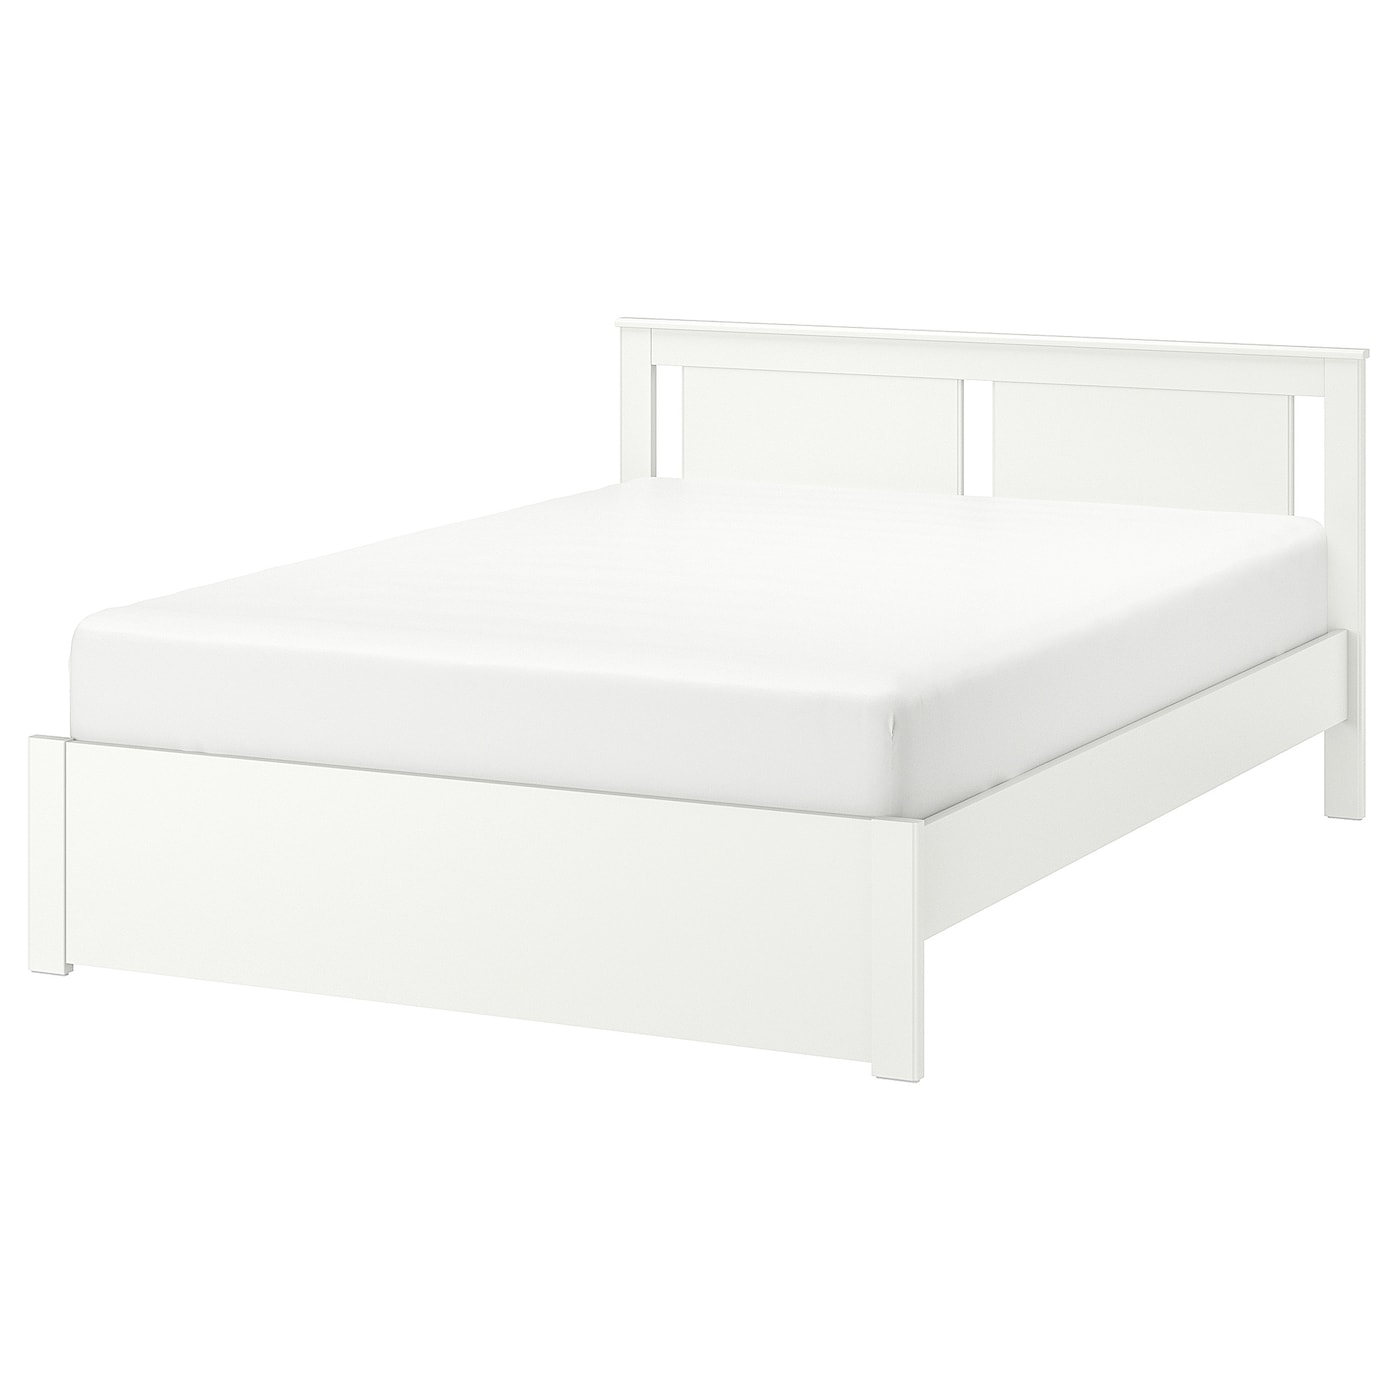 Каркас кровати - IKEA SONGESAND/LURÖY/LUROY, 200х140 см, белый, СОНГЕСАНД/ЛУРОЙ ИКЕА